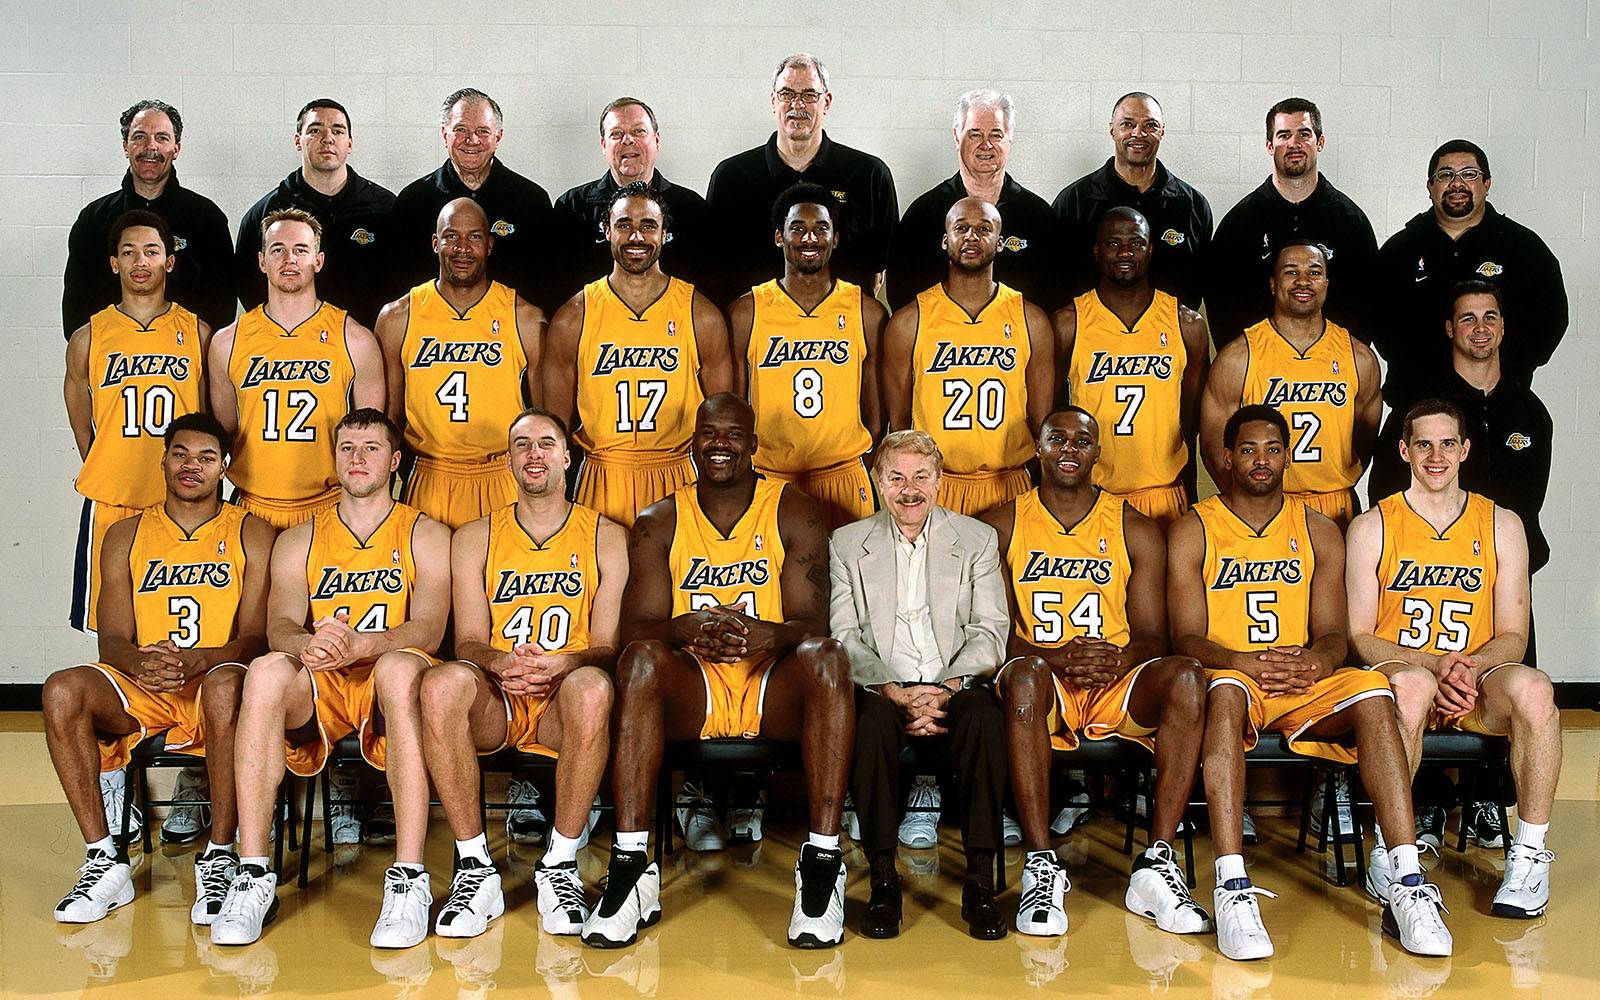 2001 Championship Los Angeles Lakers